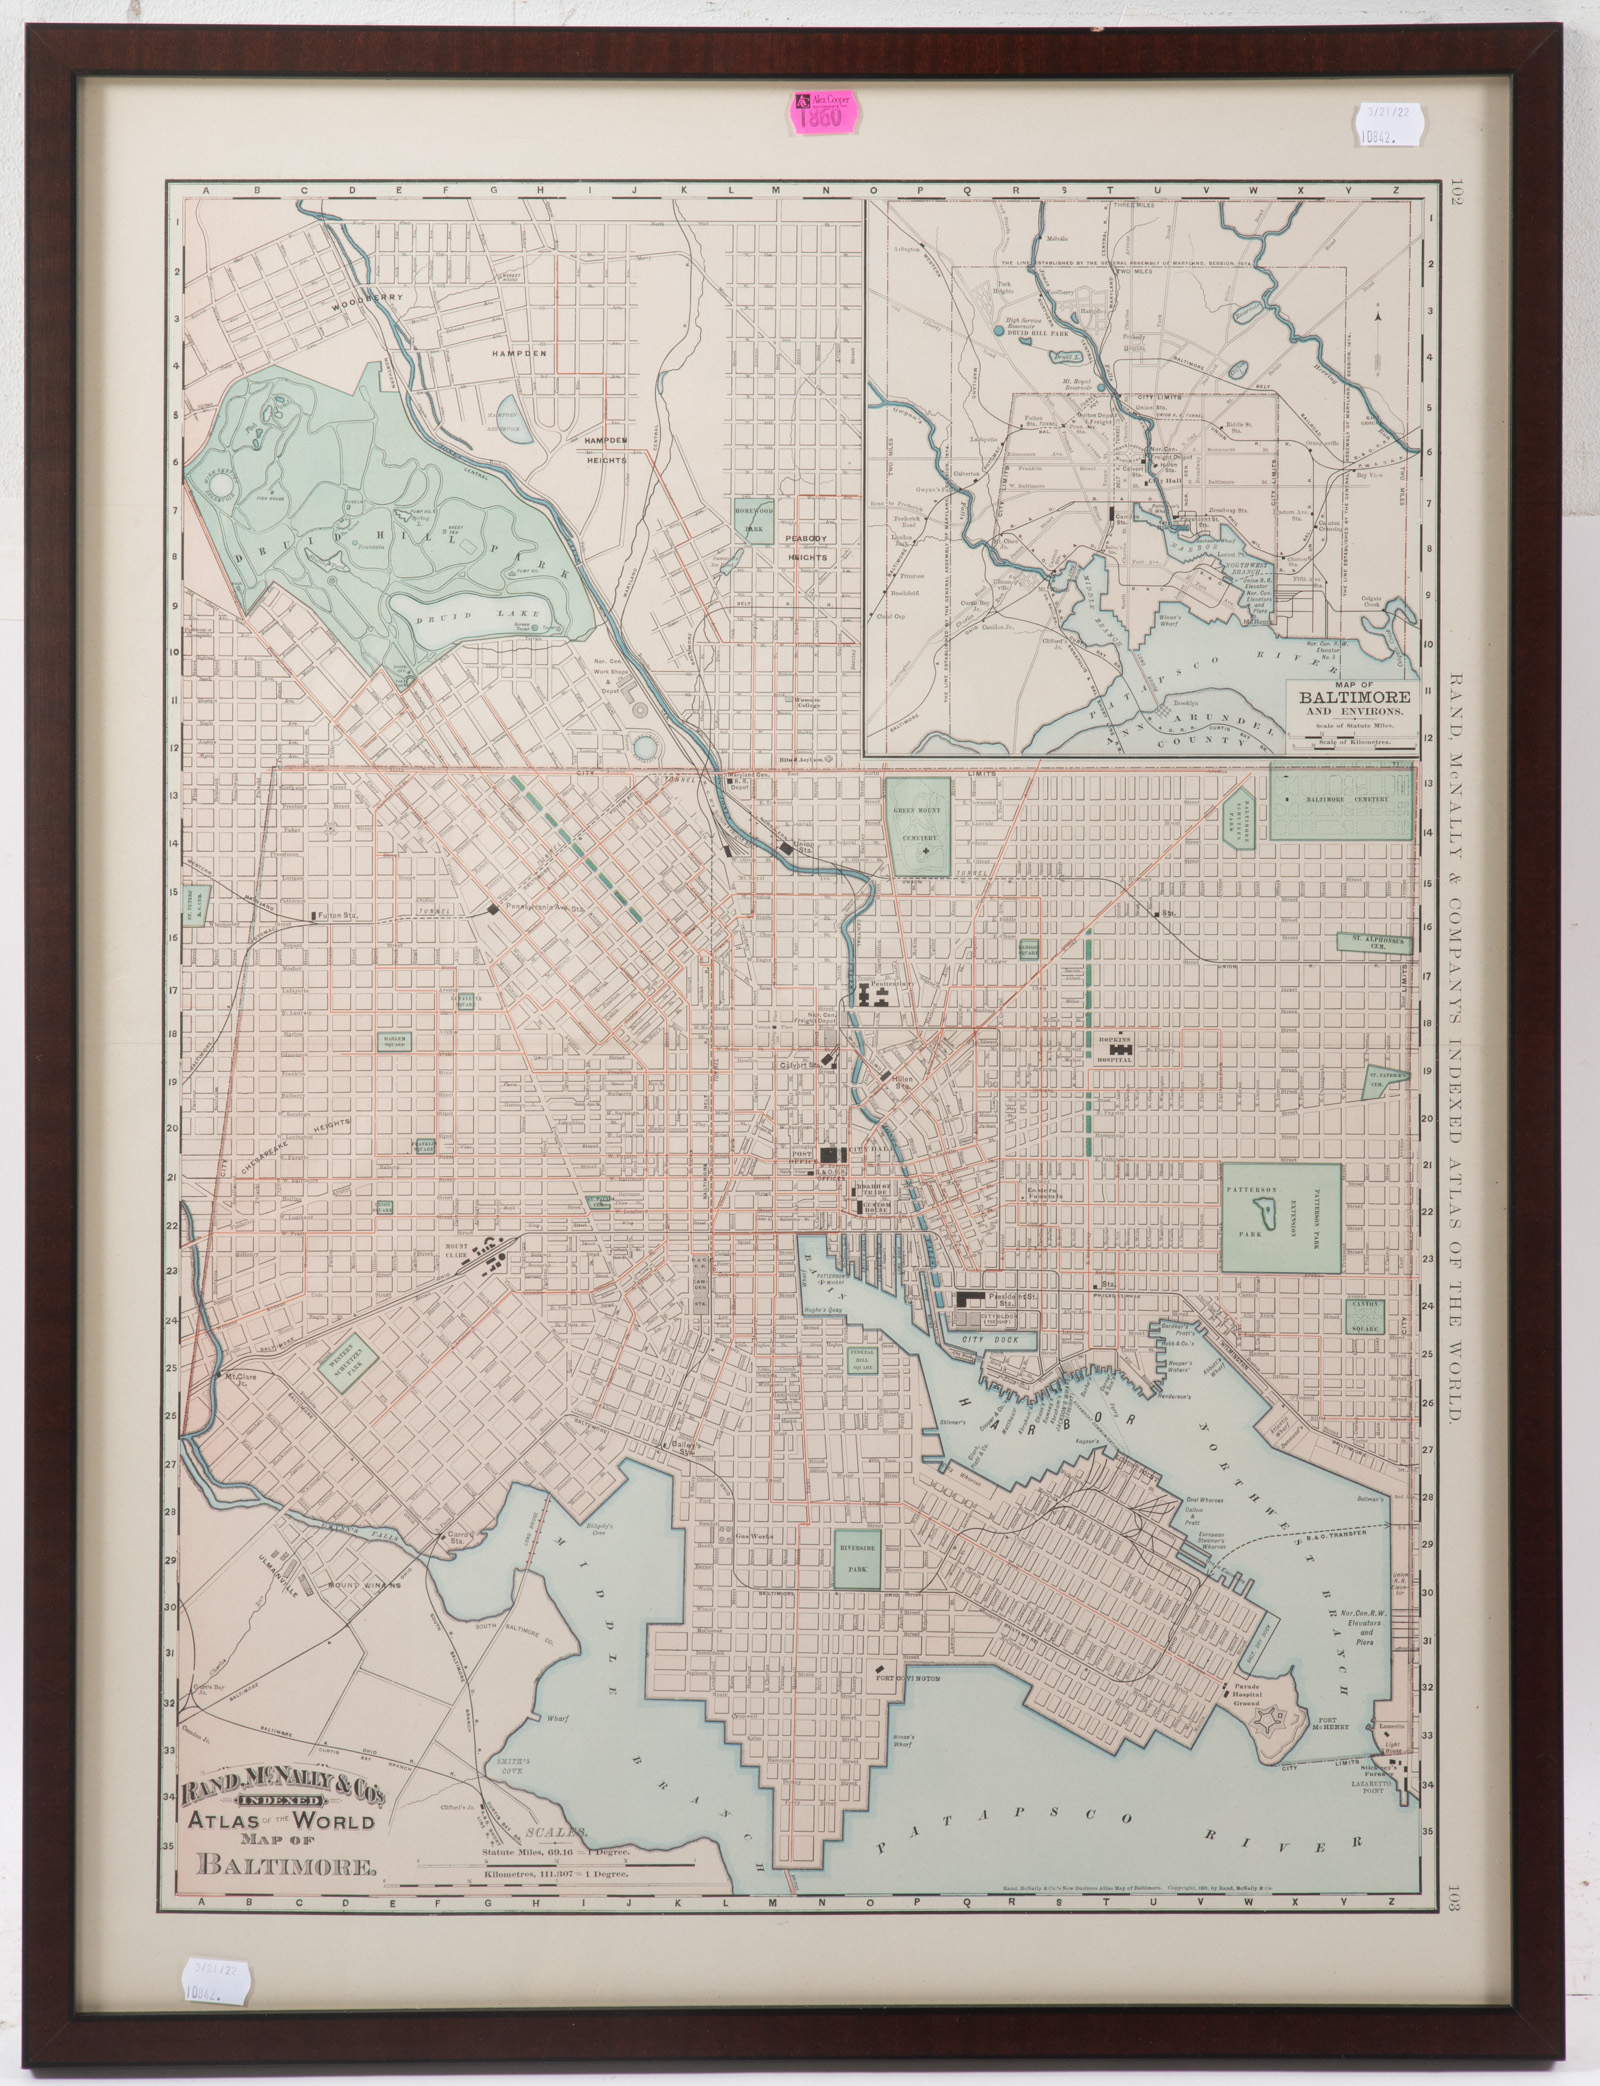 1891 RAND, MCNALLY & CO. MAP OF BALTIMORE